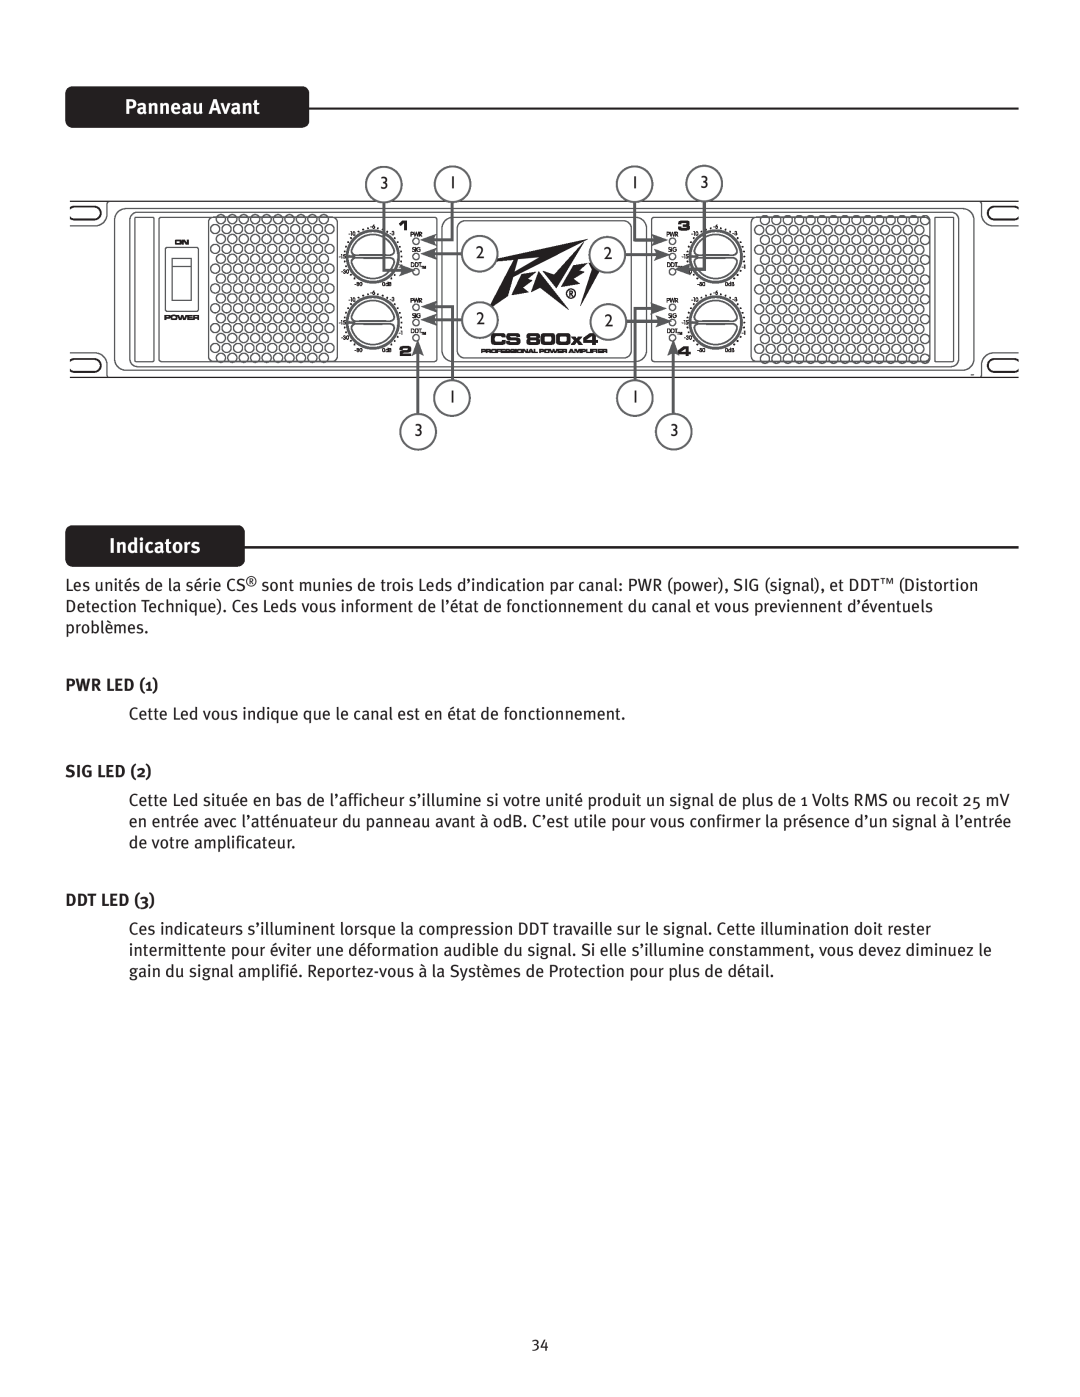 Peavey CS 800x4 owner manual Panneau Avant, Indicators, Pwr Led, Sig Led, Ddt Led 